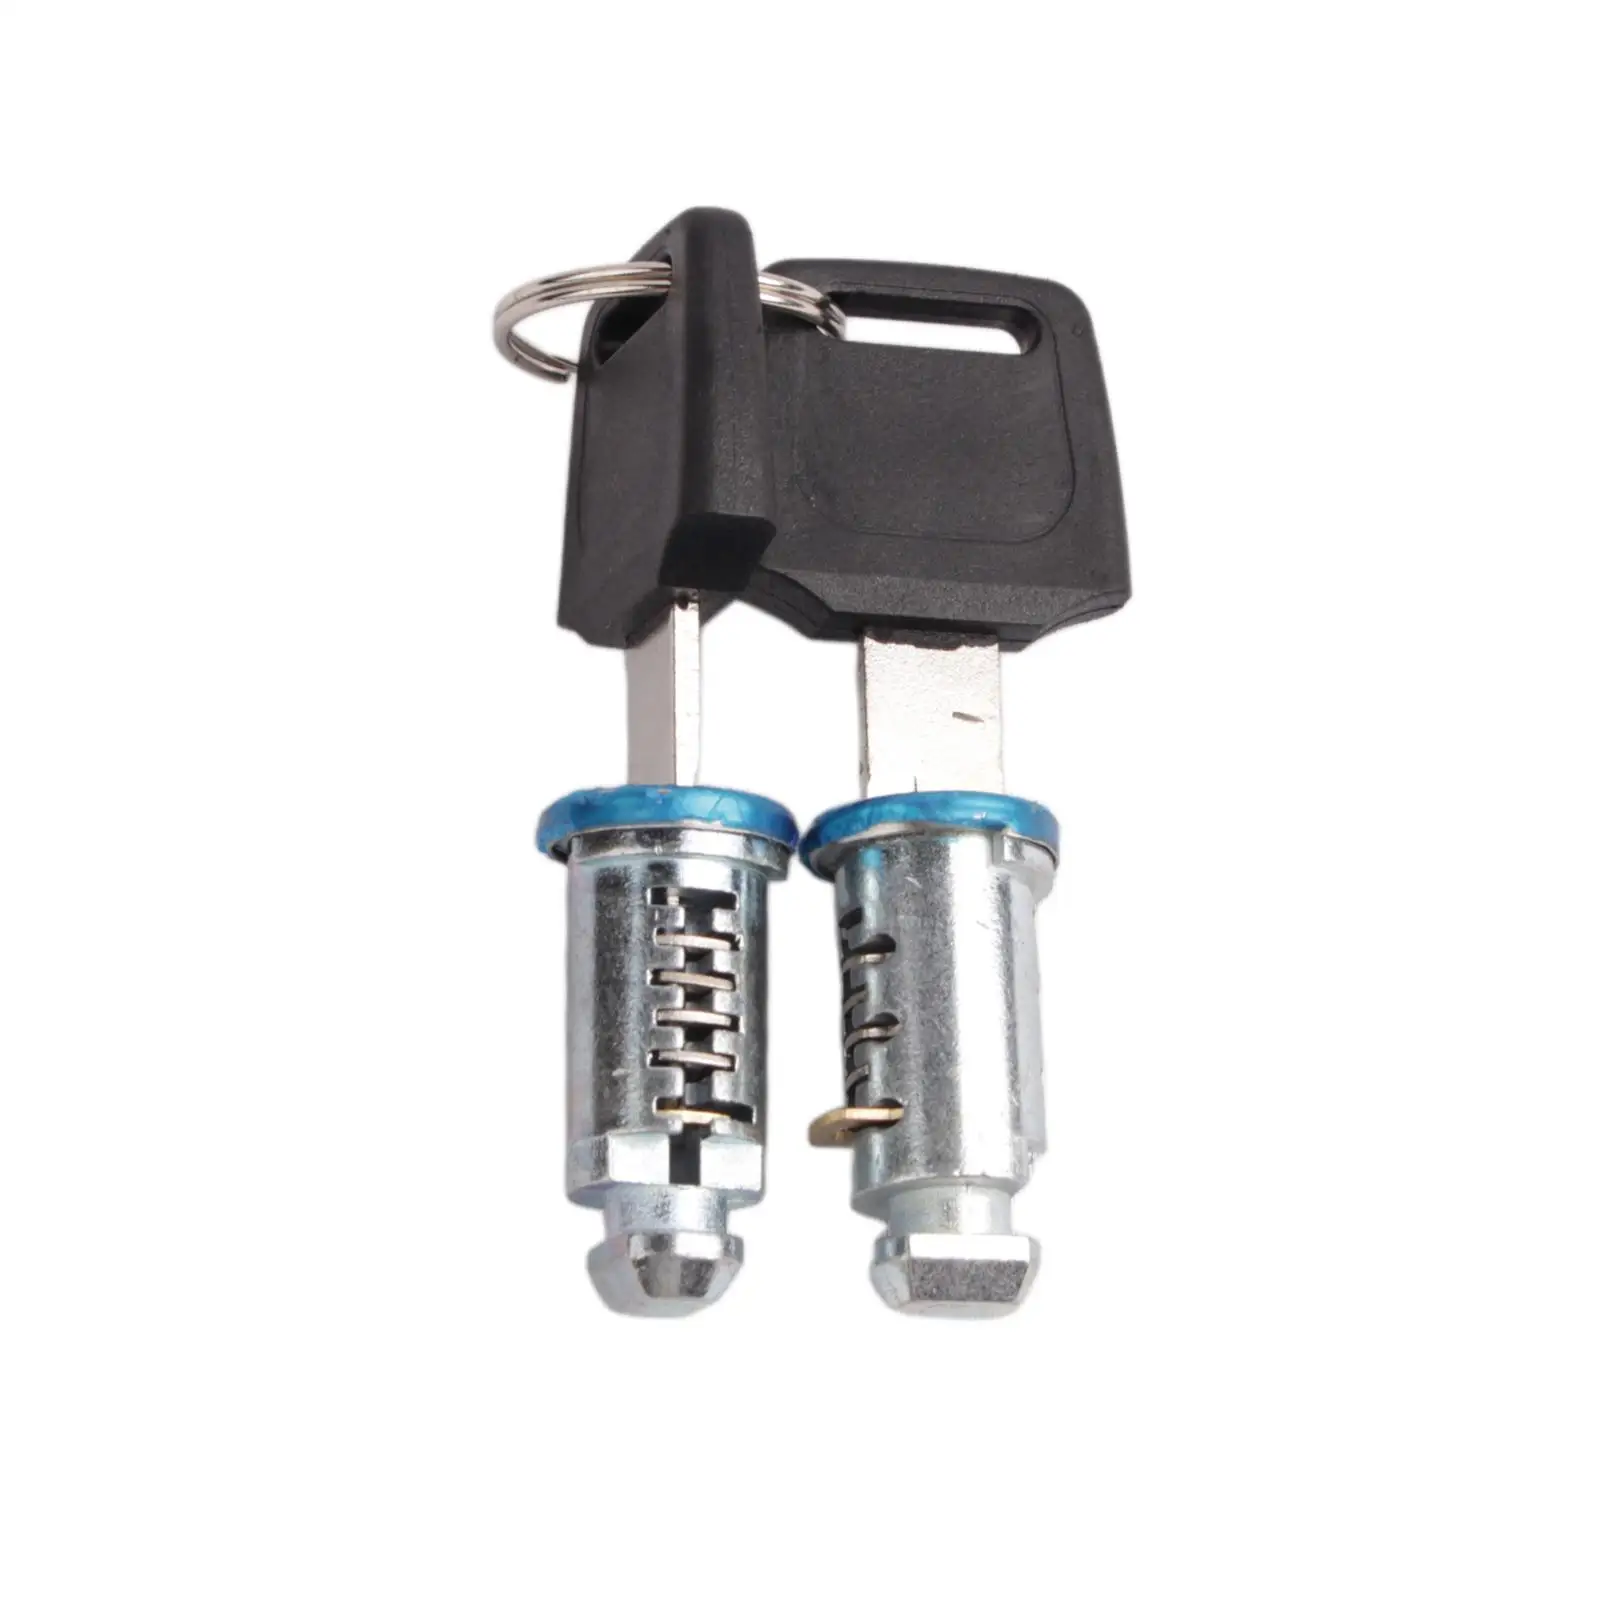 Rooftop Cargo Rack Locks & Keys Locking Key Lock Cylinder Kit for Roof Luggage Rack Car Rack System Accessory Part